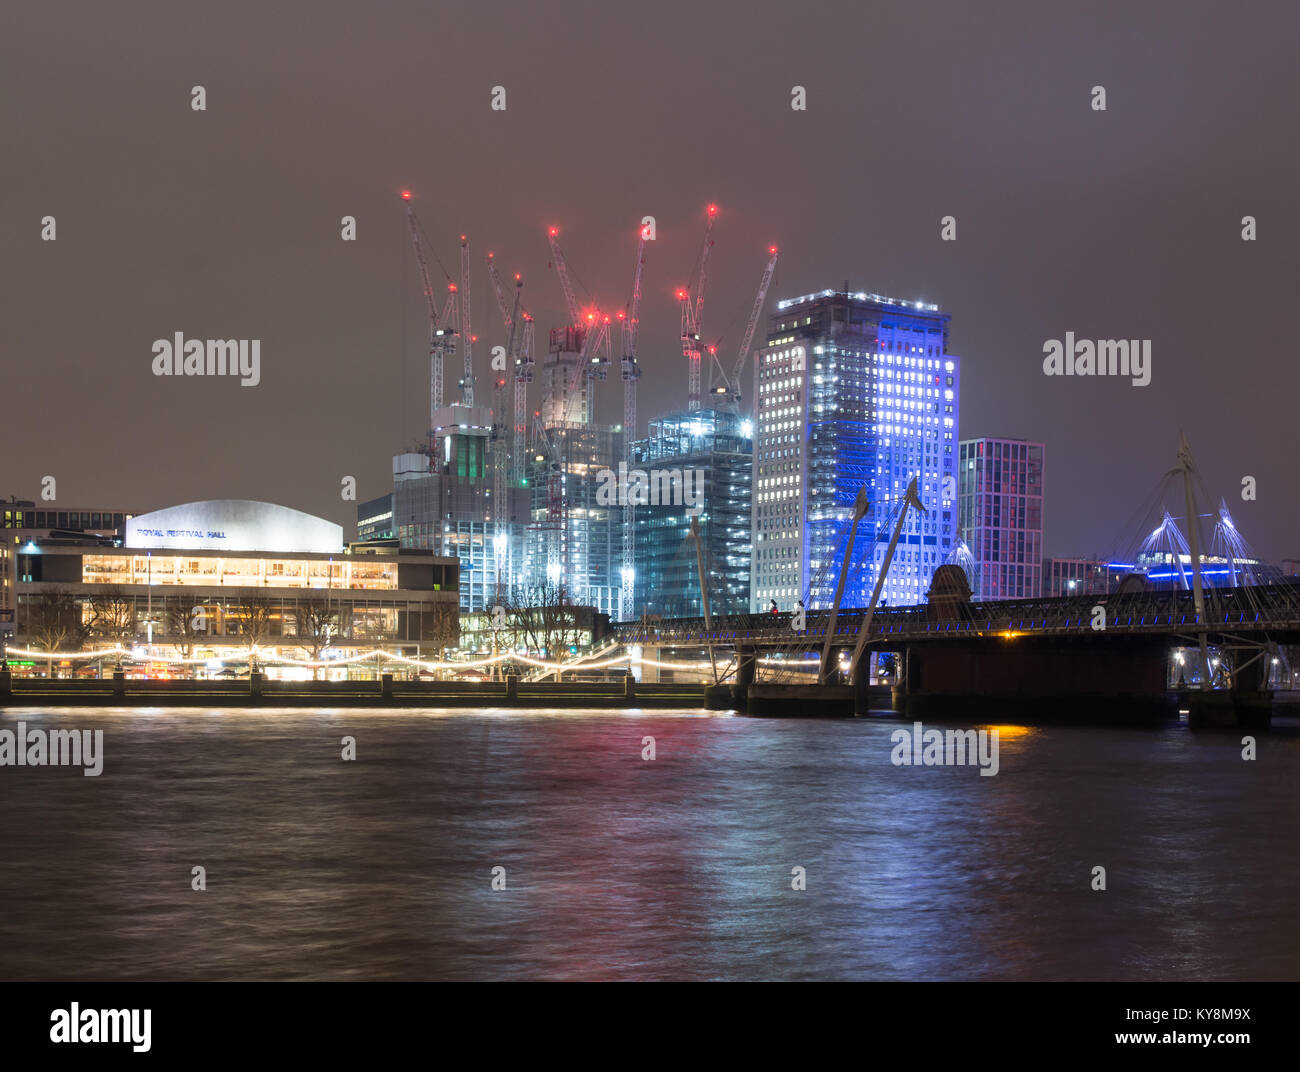 London, England, UK - Januar 11, 2018: Turmdrehkrane Cluster neben der Royal Festival Hall und Hungerford Brücke an der Shell Centre während intensiven Stockfoto